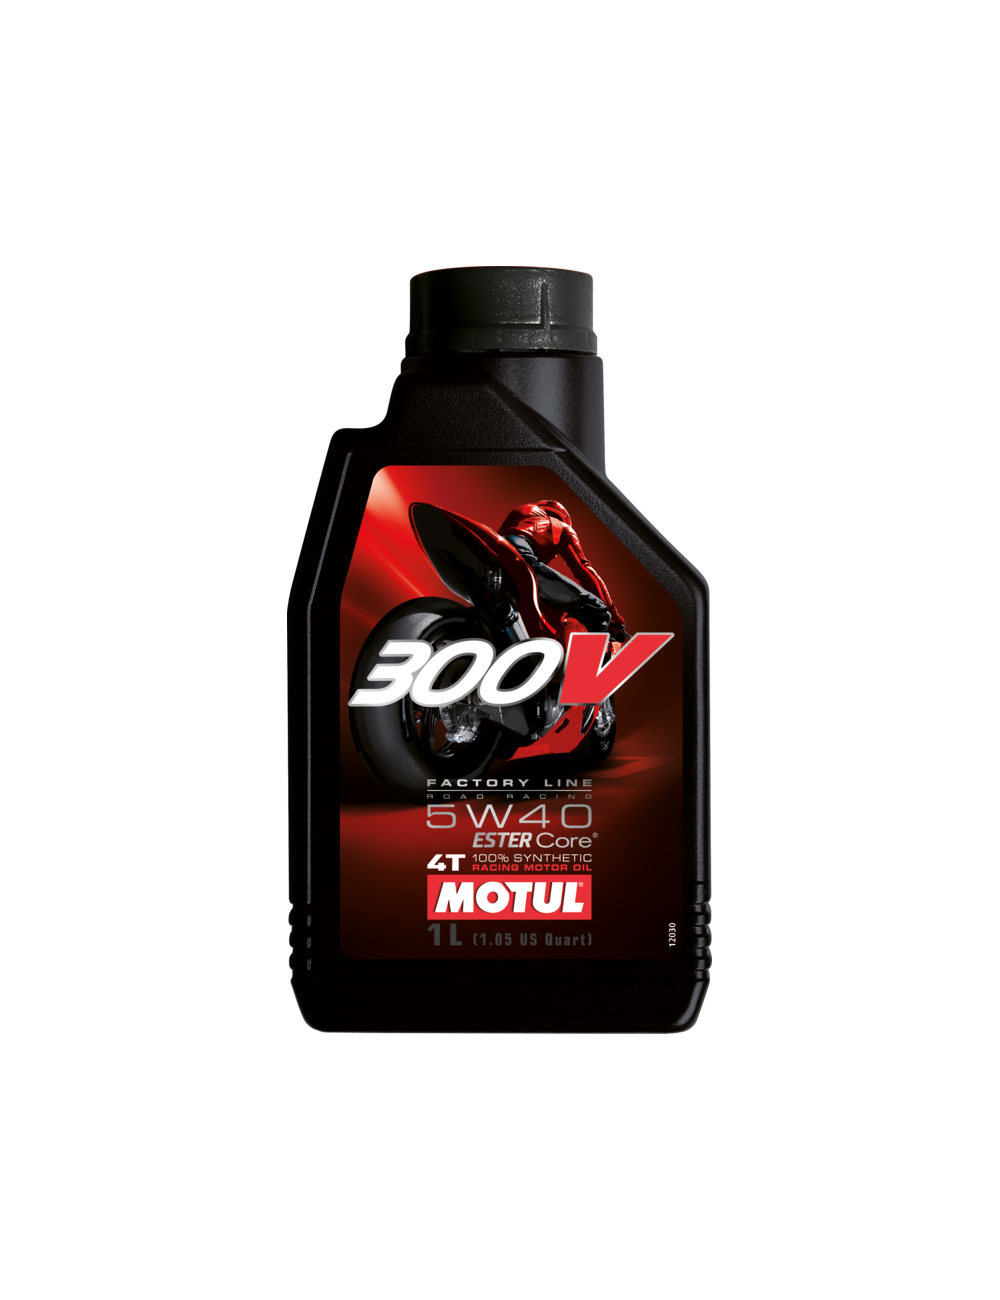 Motul 300V Factory Line Road Racing 5W40